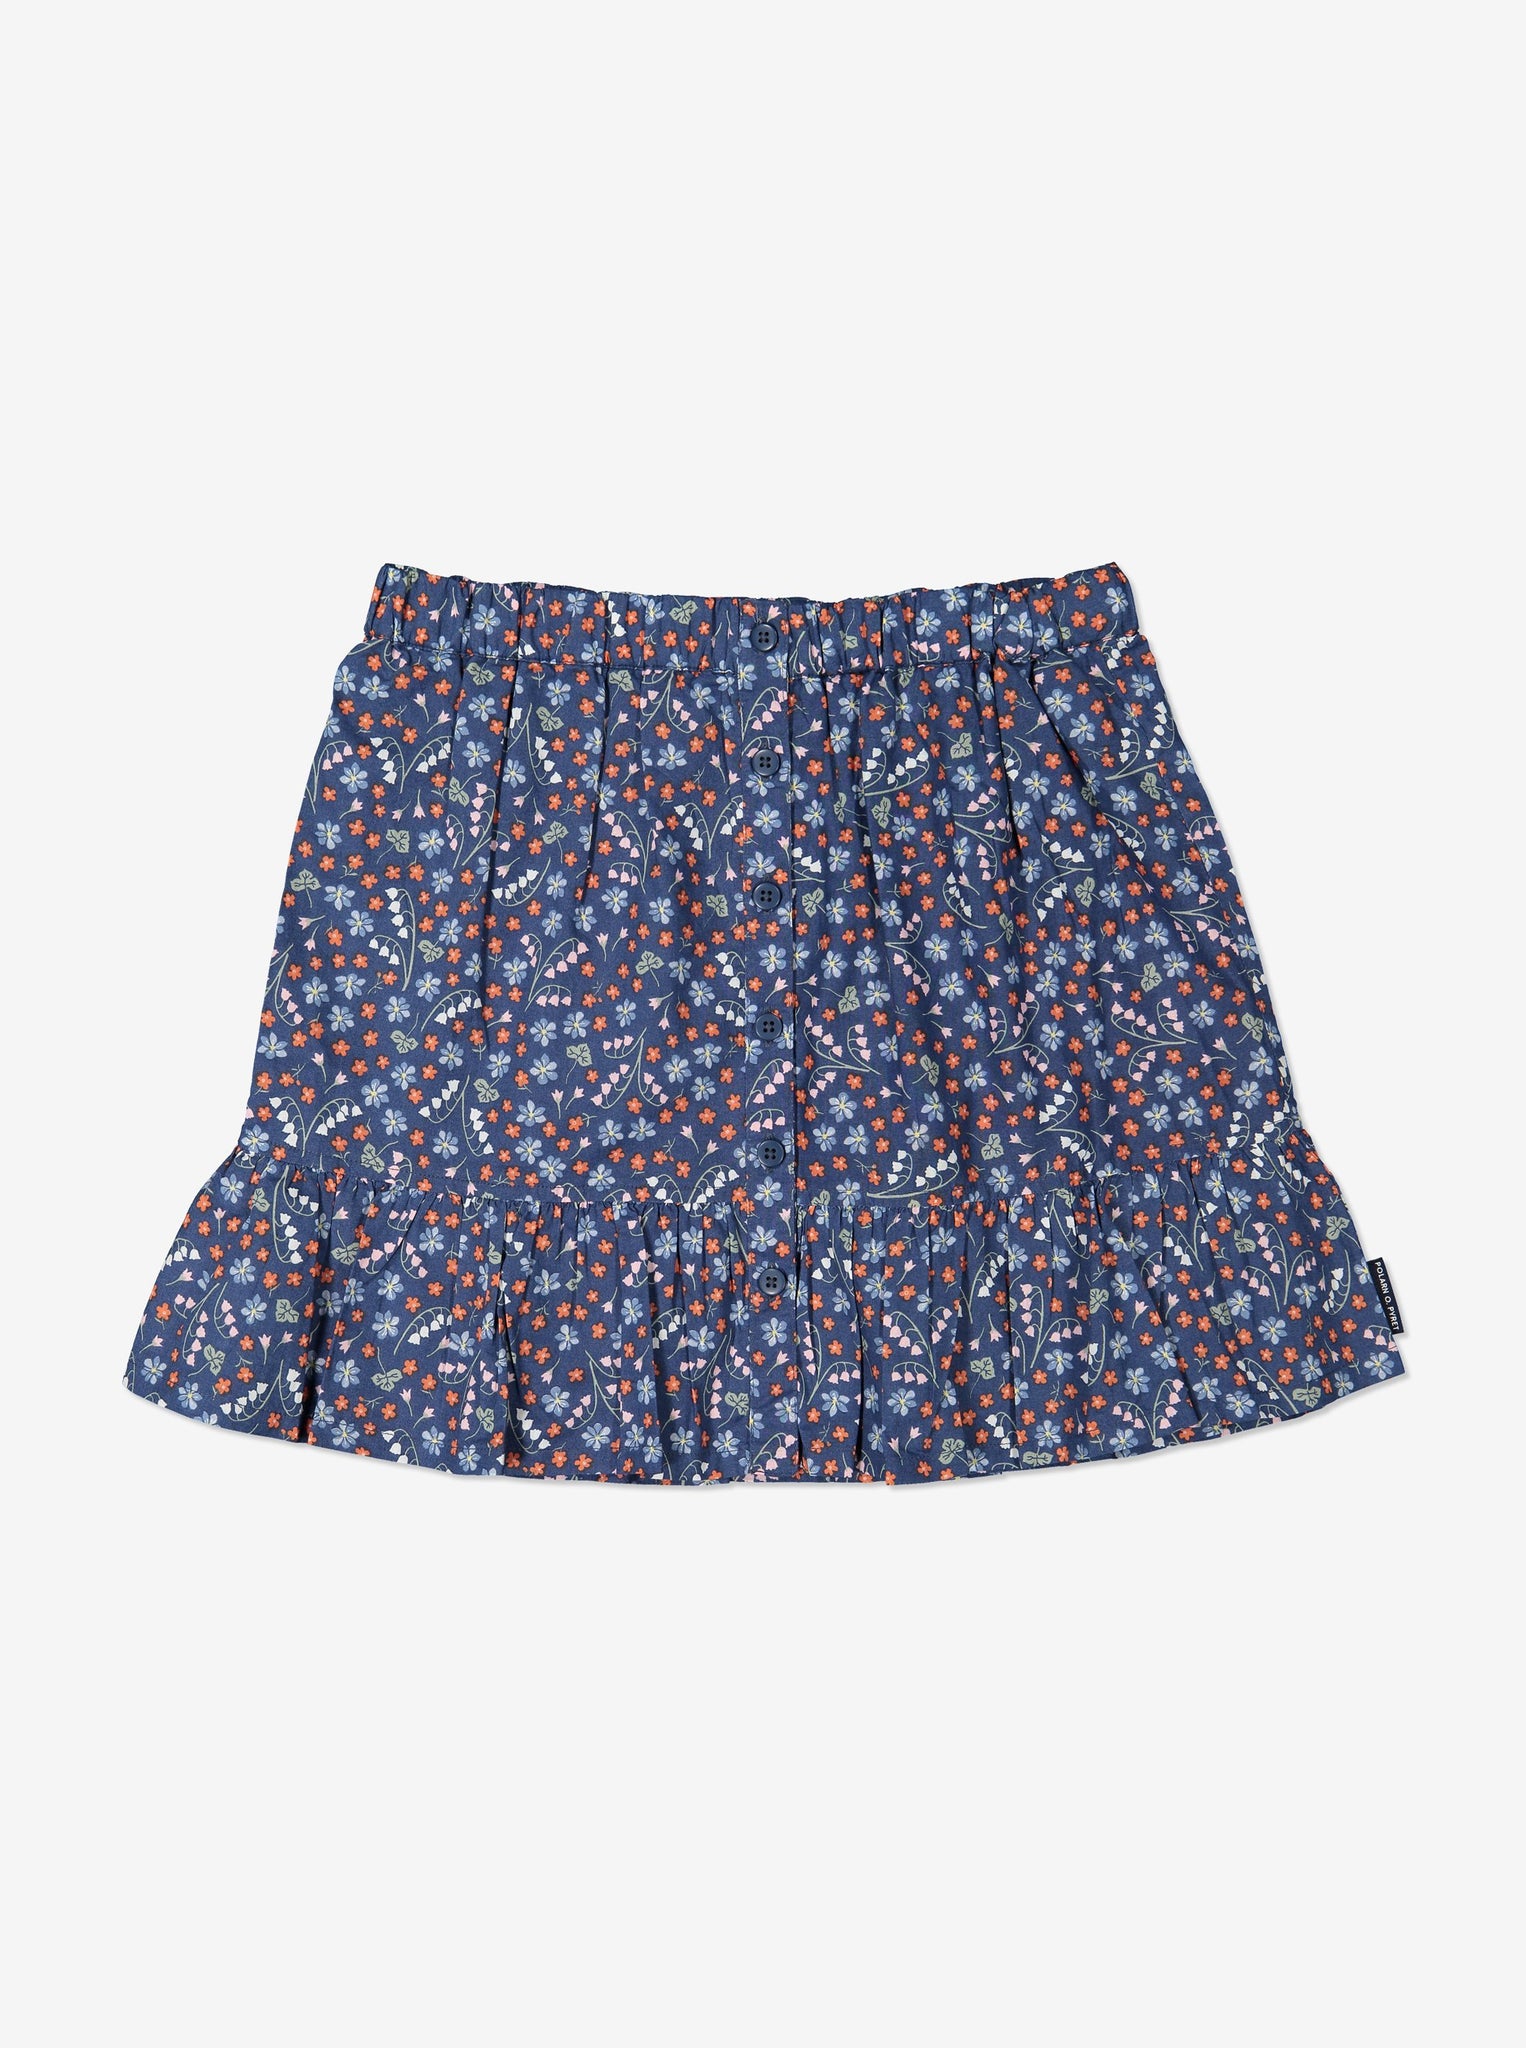 Girls Organic Cotton Blue Flowery Skirt